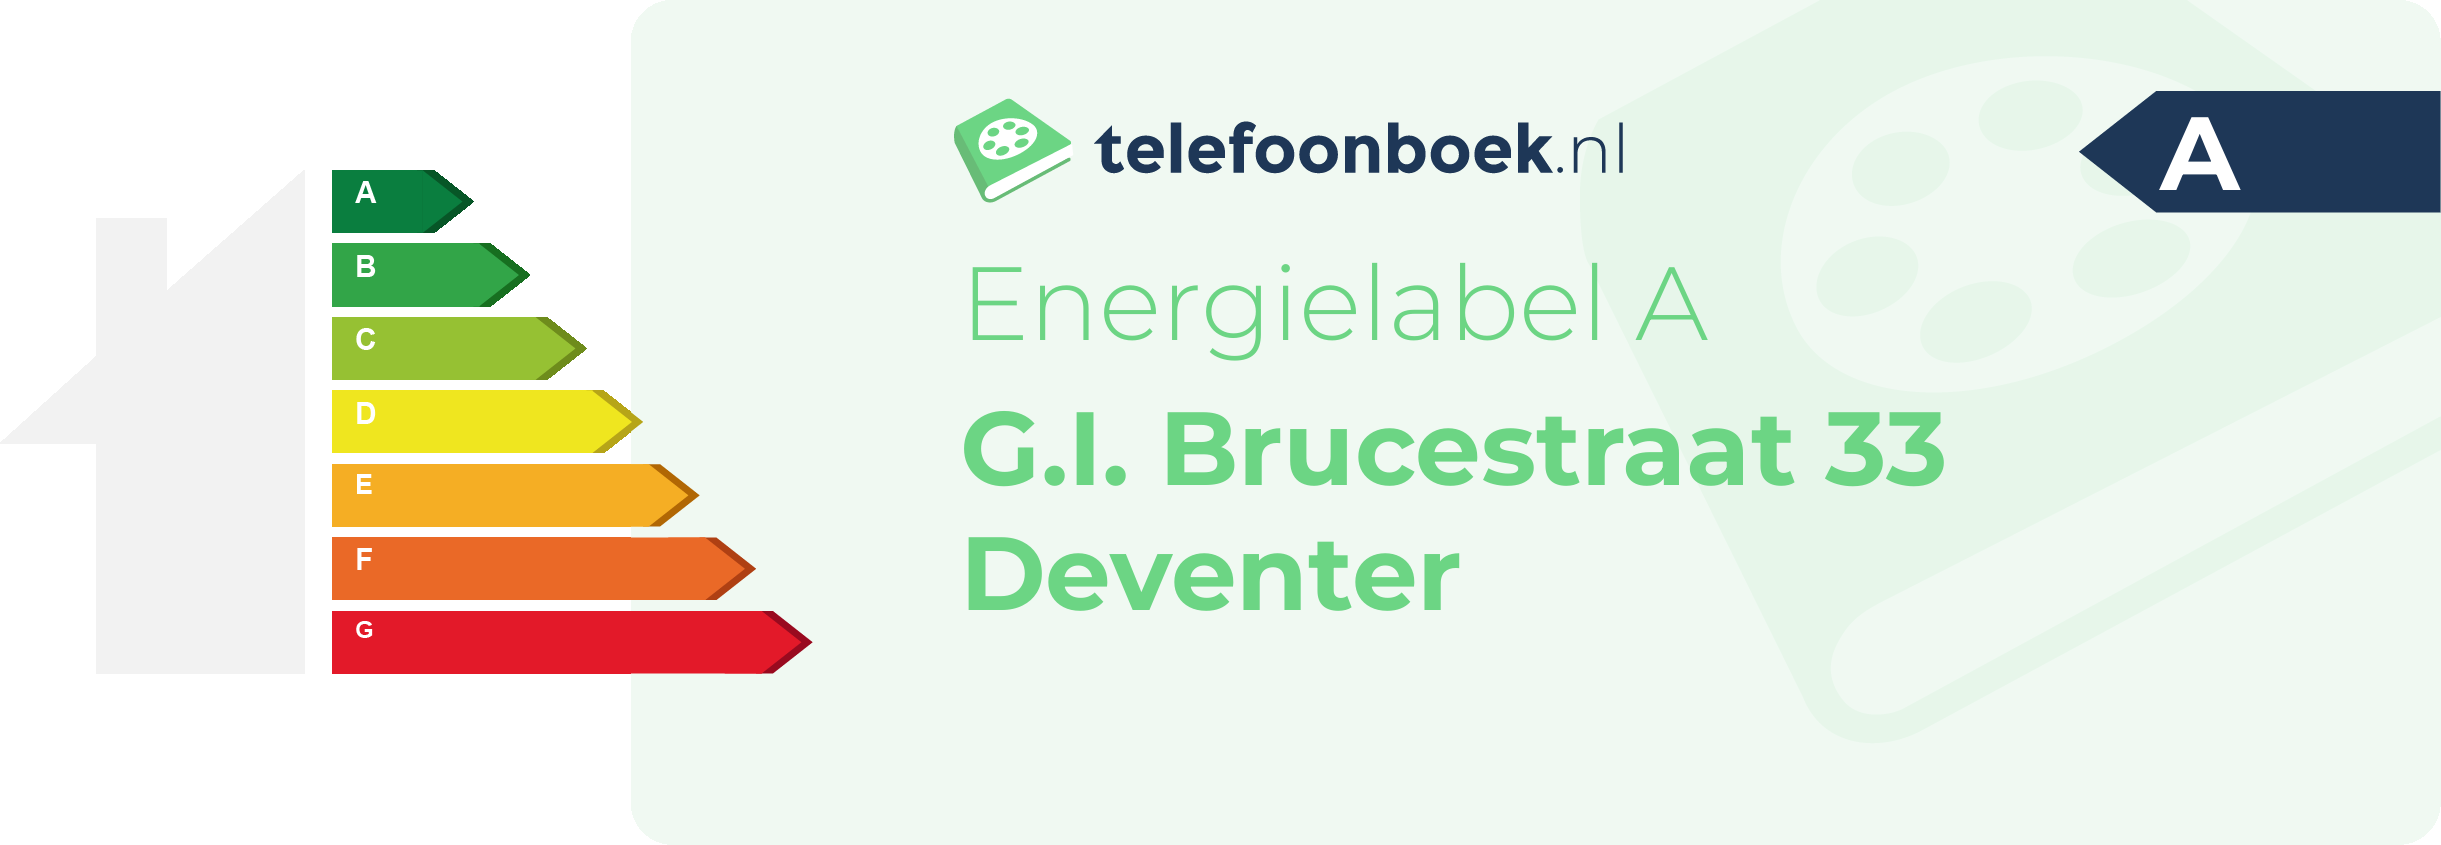 Energielabel G.I. Brucestraat 33 Deventer